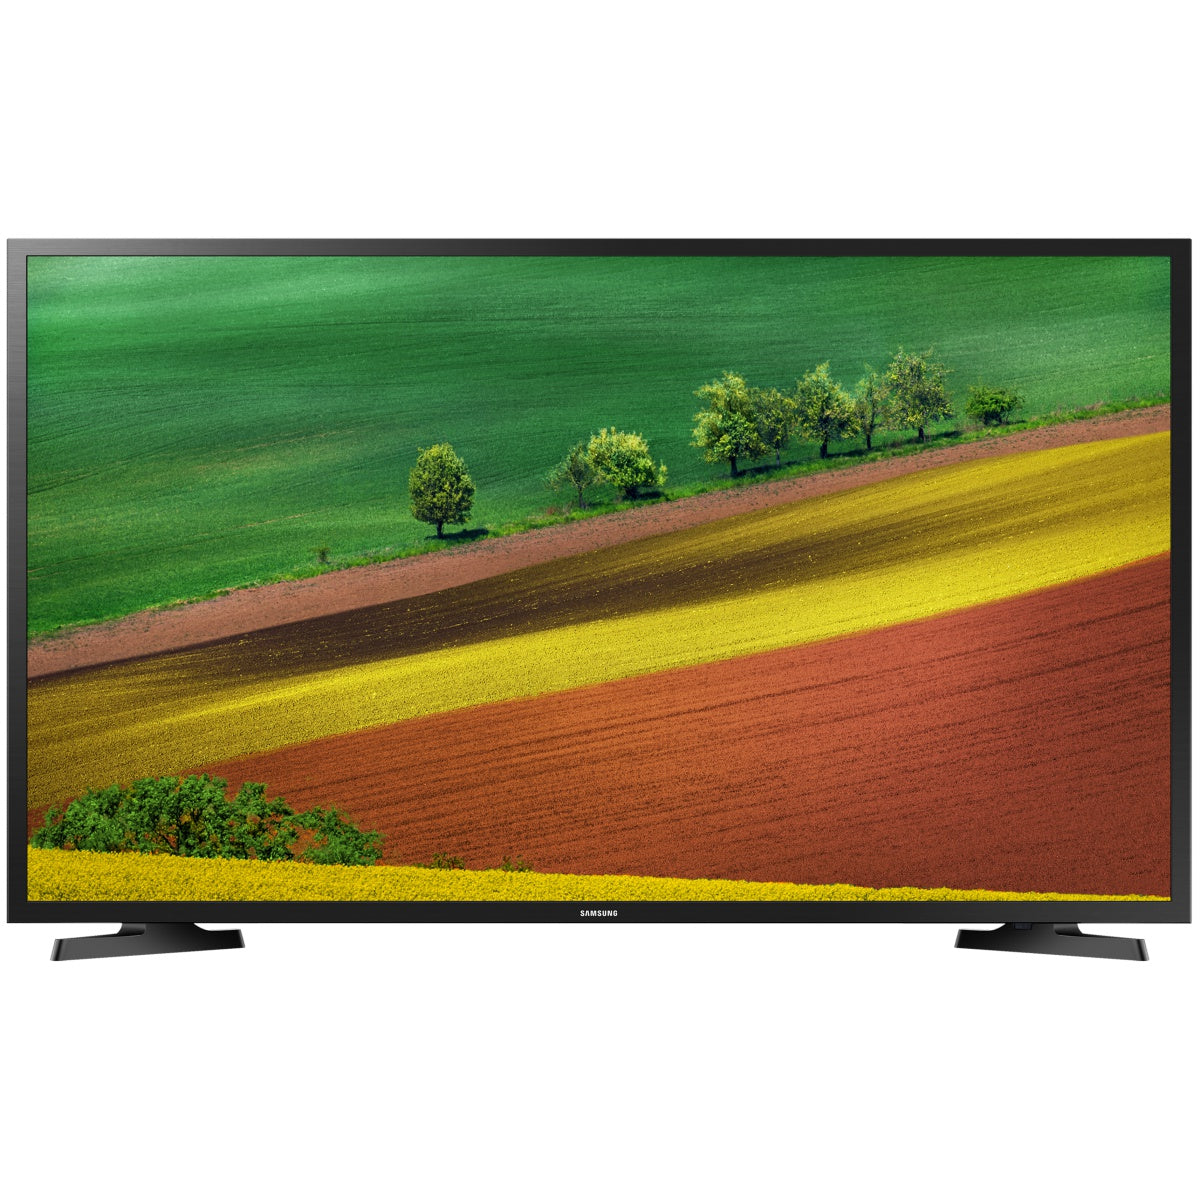 SAMSUNG 32" HD DTV LED TV - UA32N5003